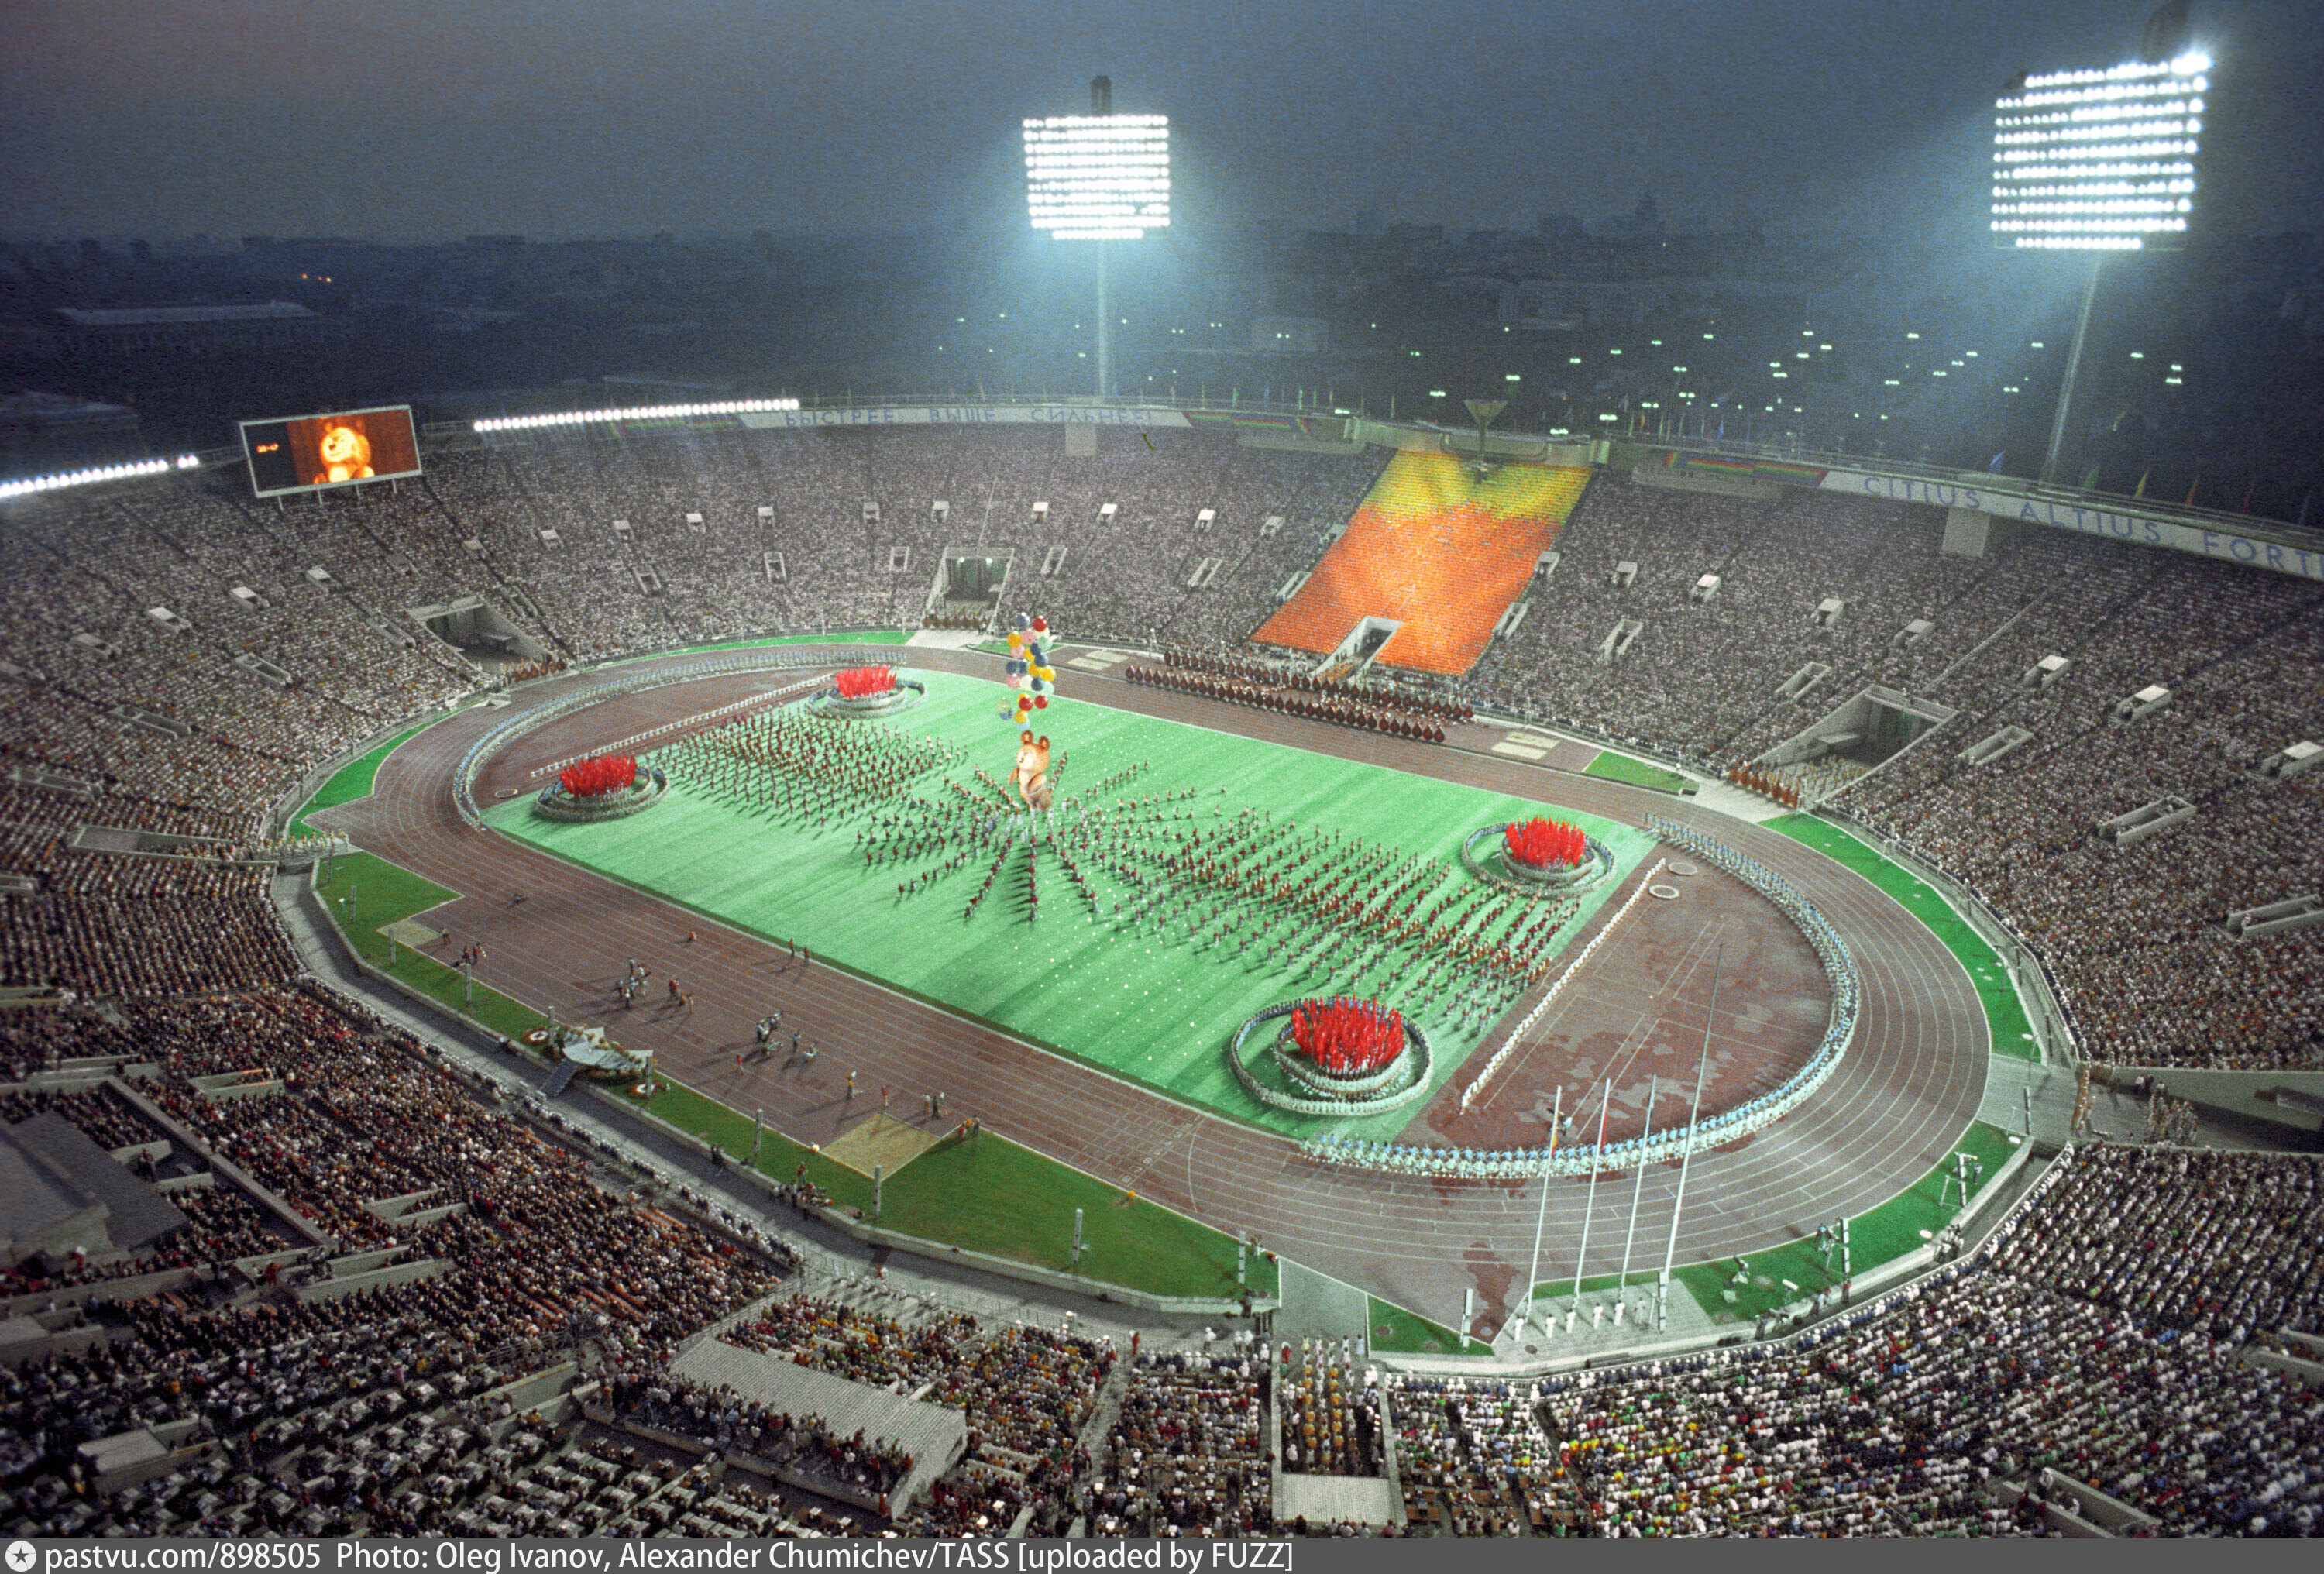 Year stadia. Стадион Лужники Москва 1980. Лужники Олимпийский комплекс 1980.